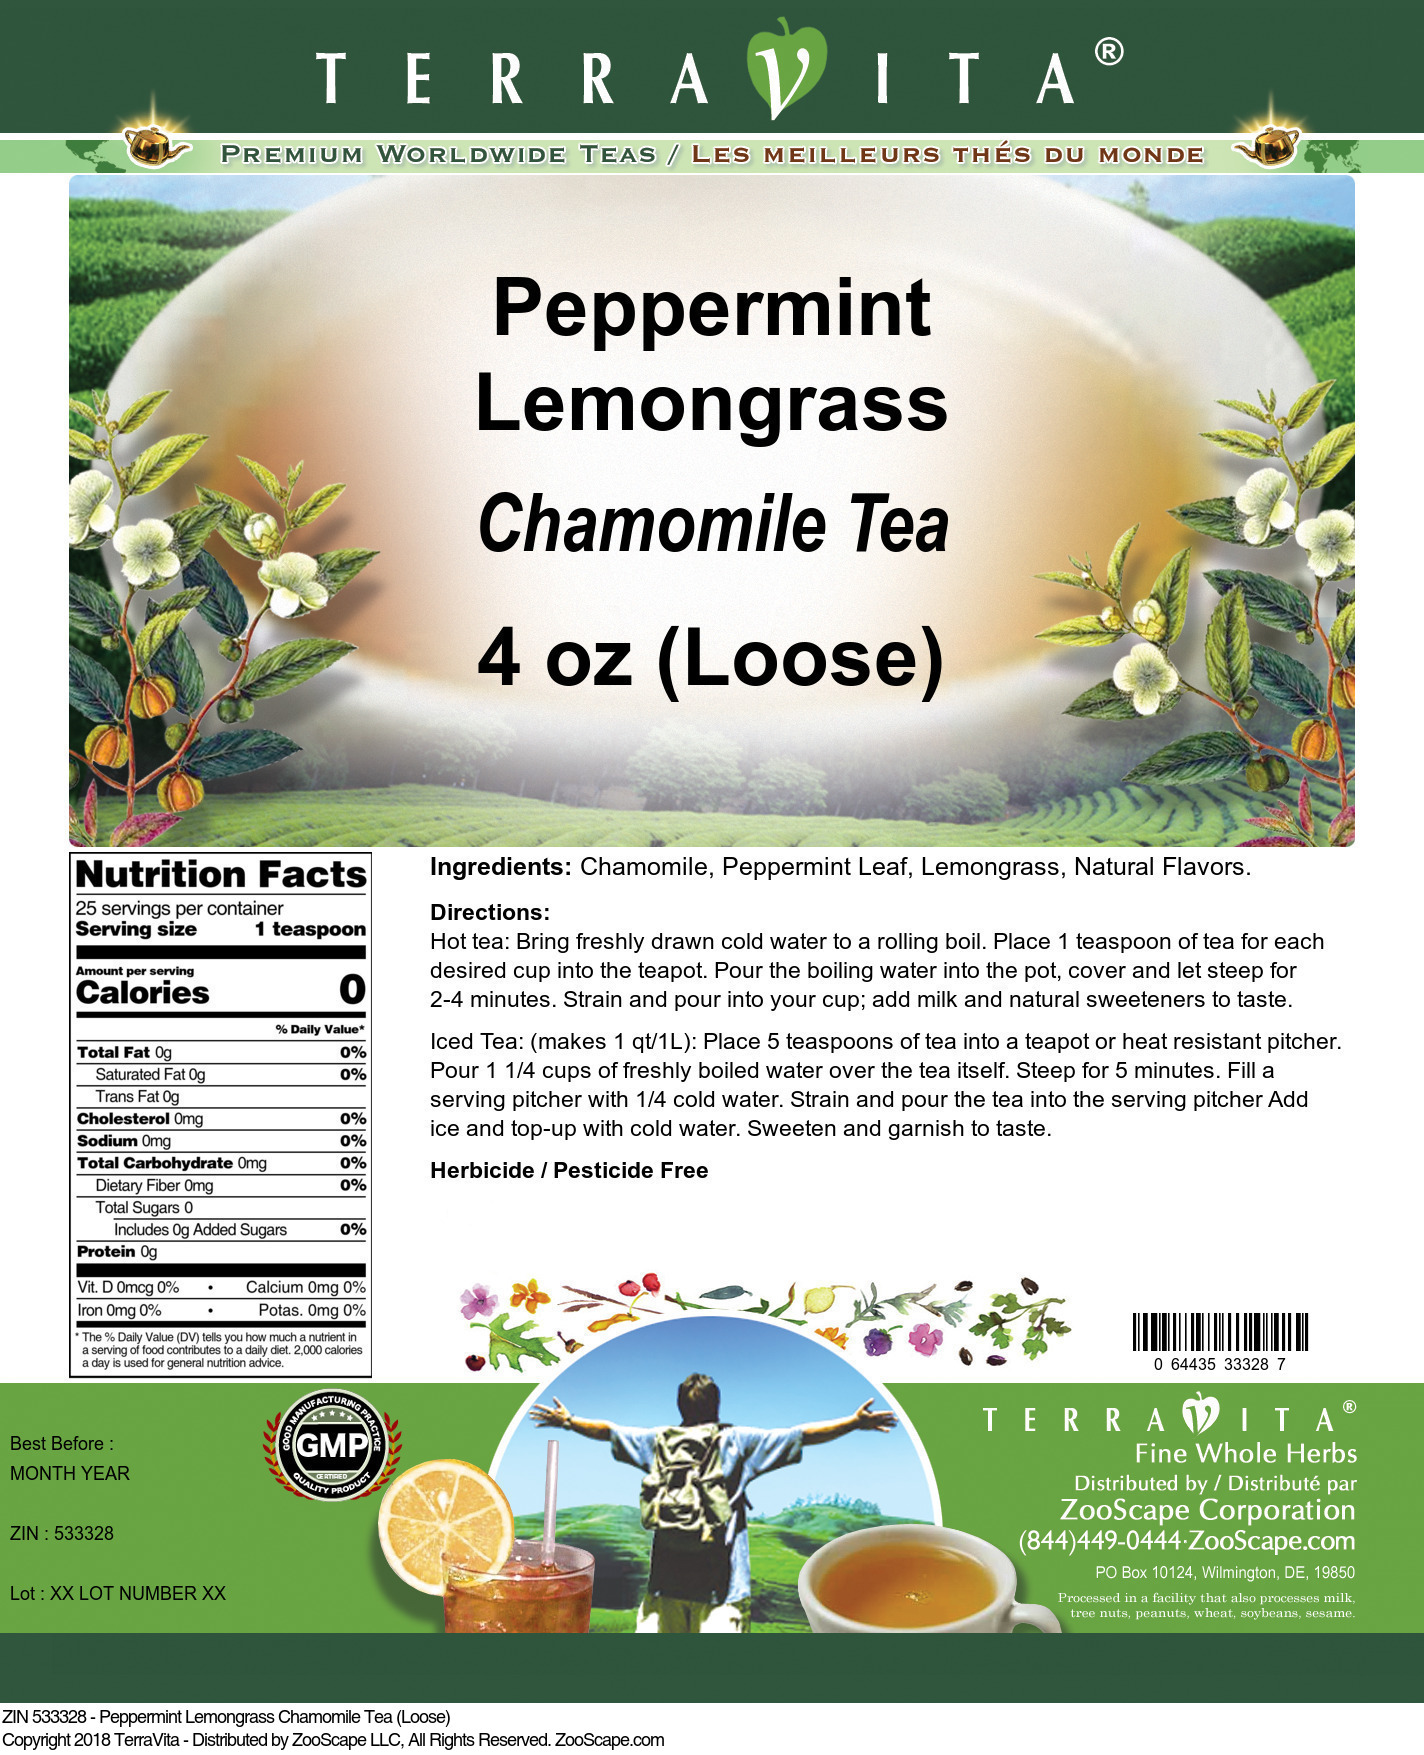 Peppermint Lemongrass Chamomile Tea (Loose) - Label